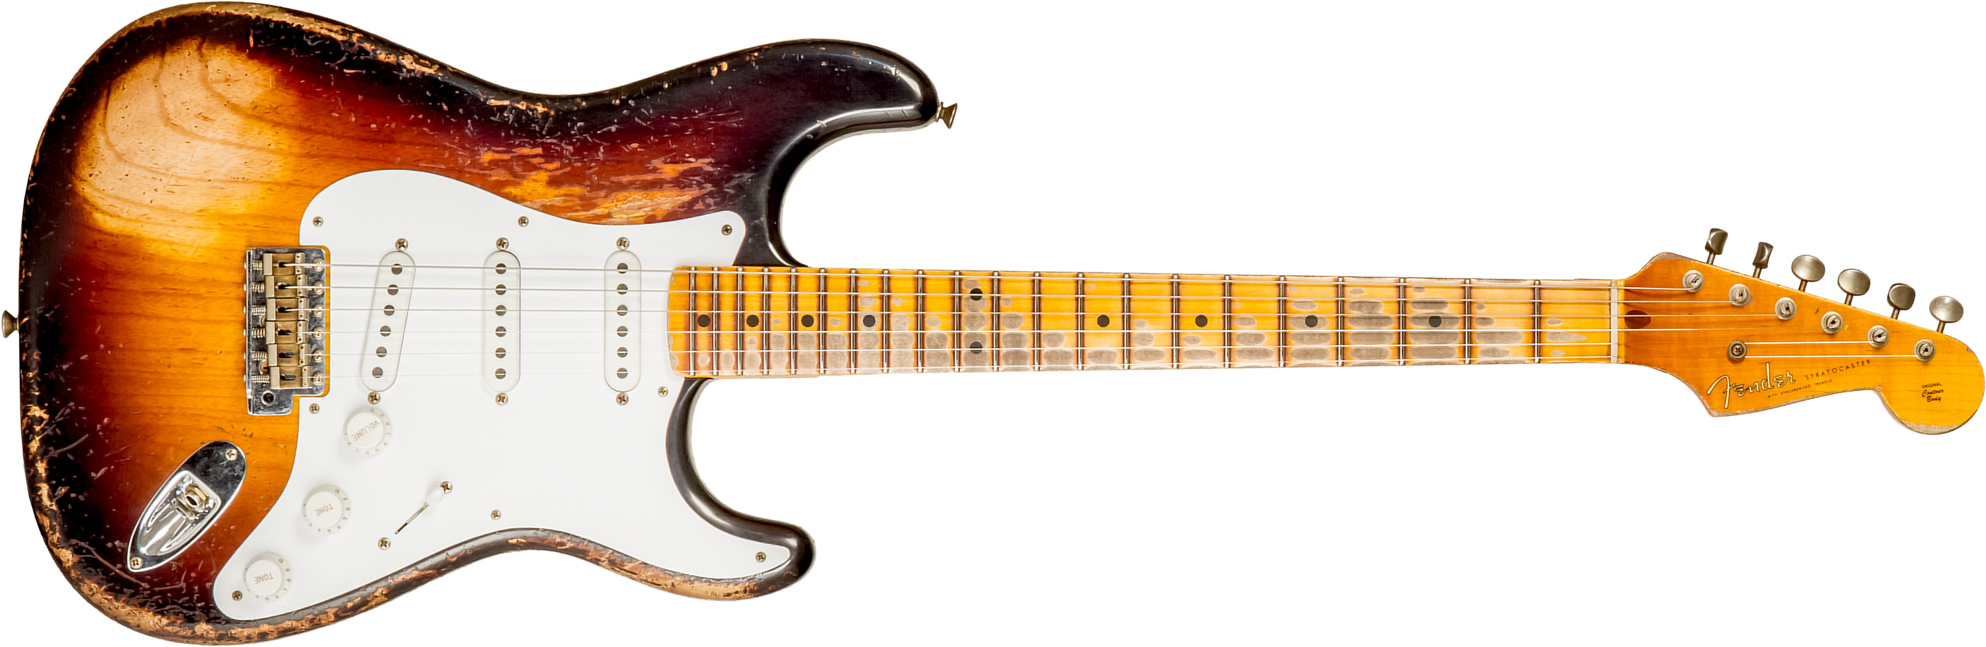 Fender Custom Shop Strat 1954 70th Anniv. Mn #xn4378 - Super Heavy Relic 2-color Sunburst - Str shape electric guitar - Main picture